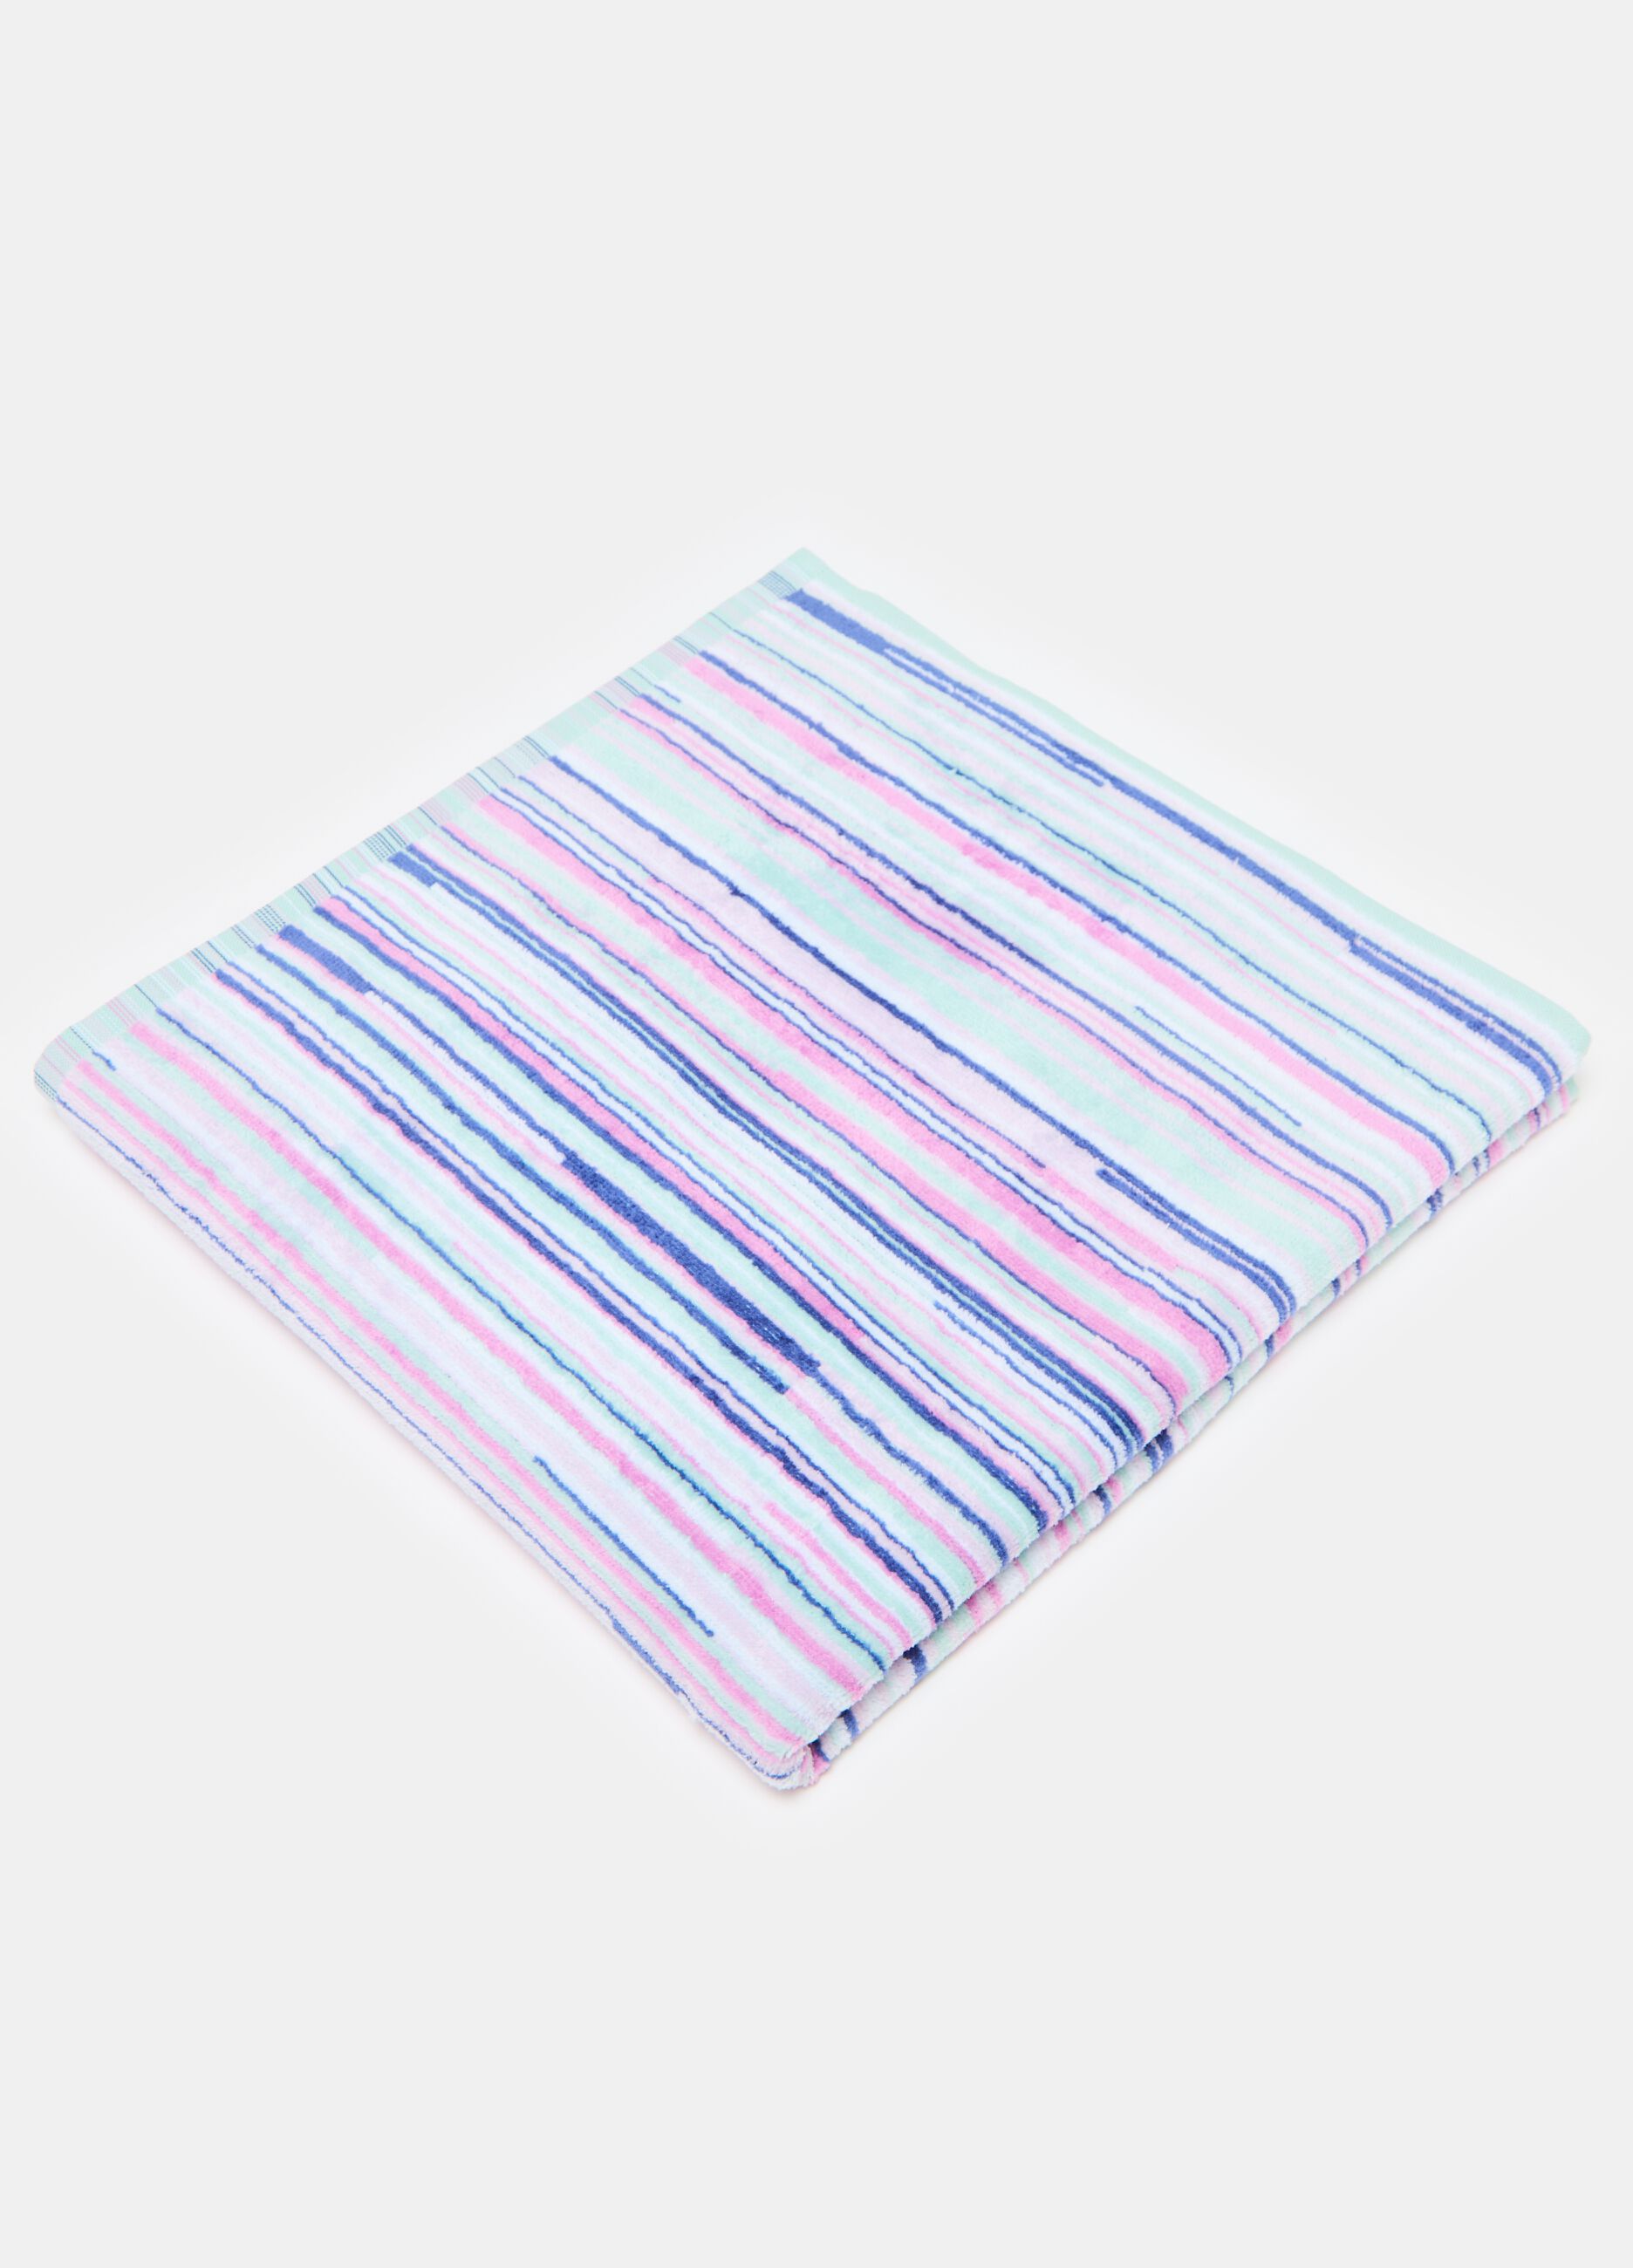 Bath towel with striped pattern